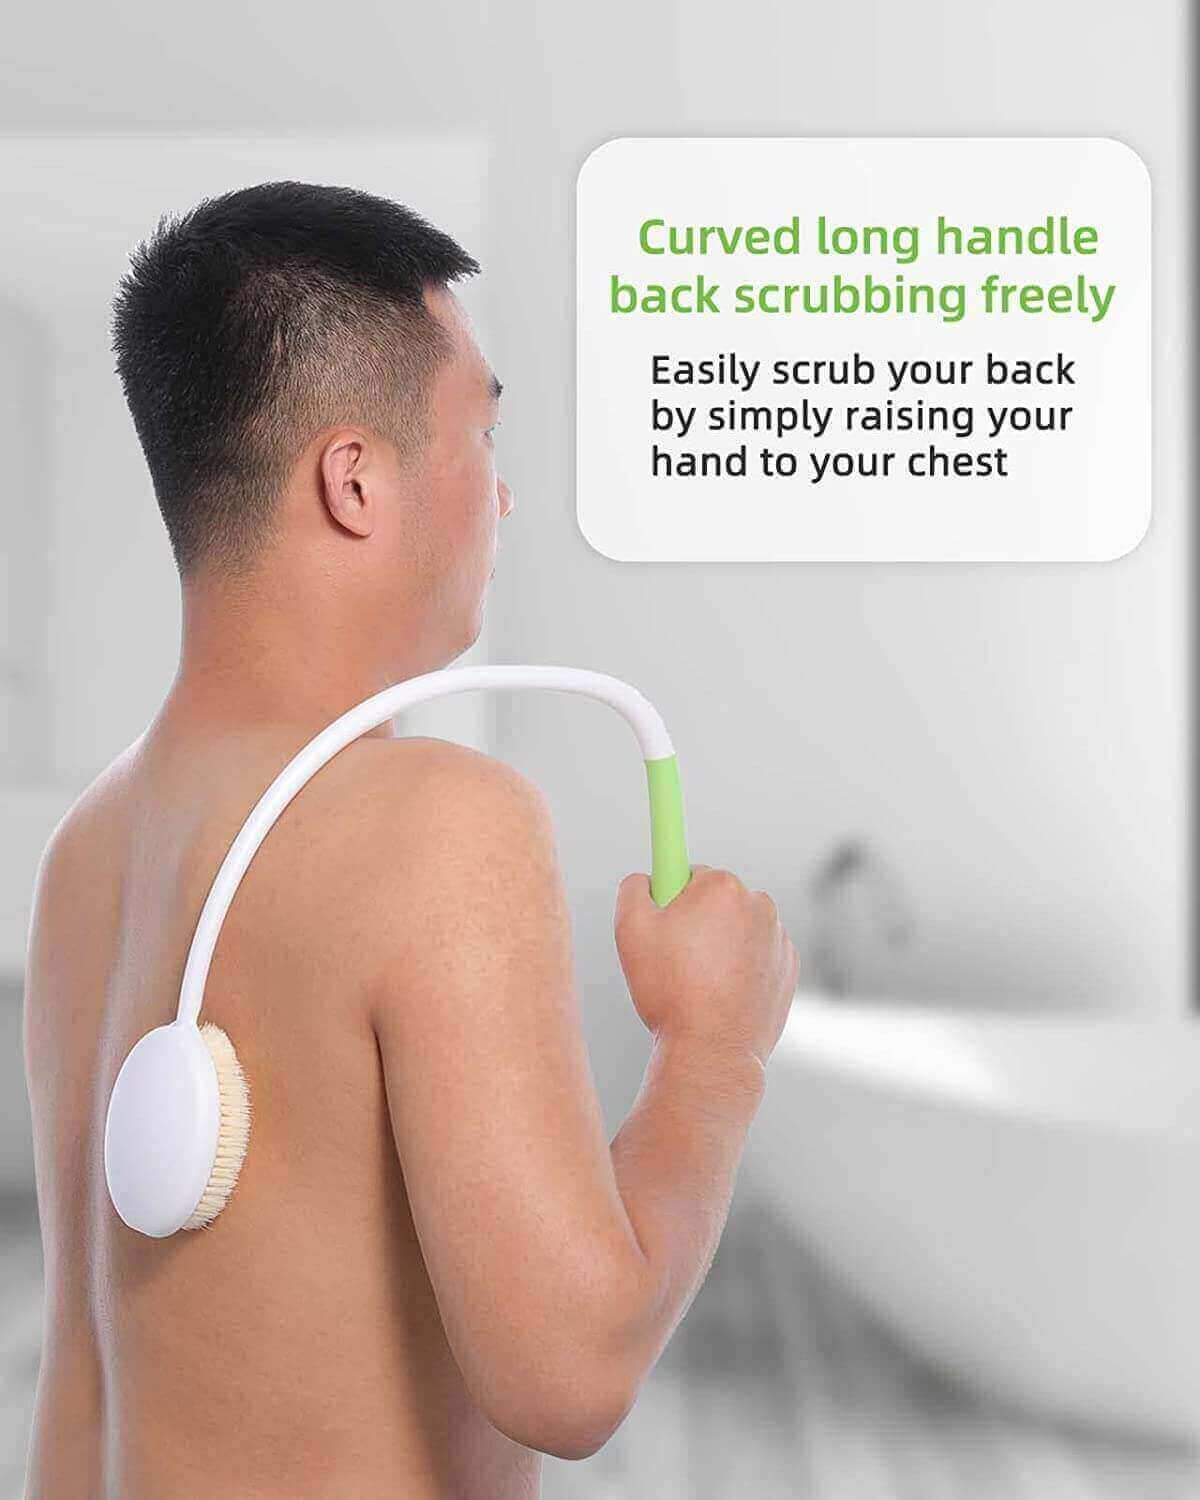 fanwer long-handle curved bath brush for back scrub, man is using the curved handle bath brush